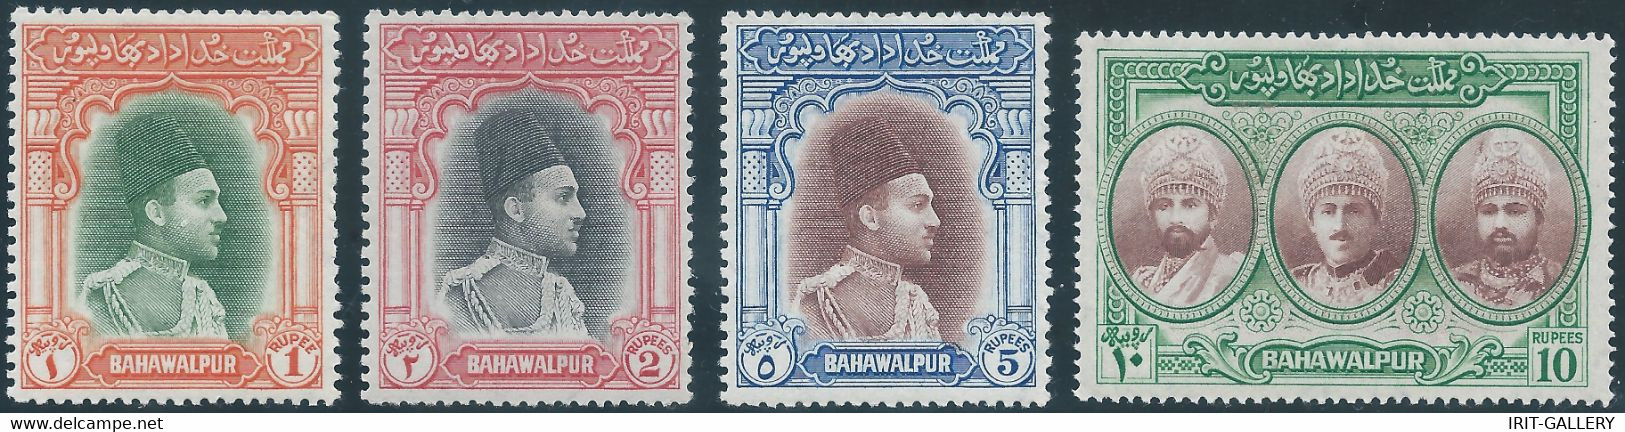 PAKISTAN,Princely States Of India Bahawalpur,1948 New Colors,1R - 2R -5R -10R,MNH - Bahawalpur